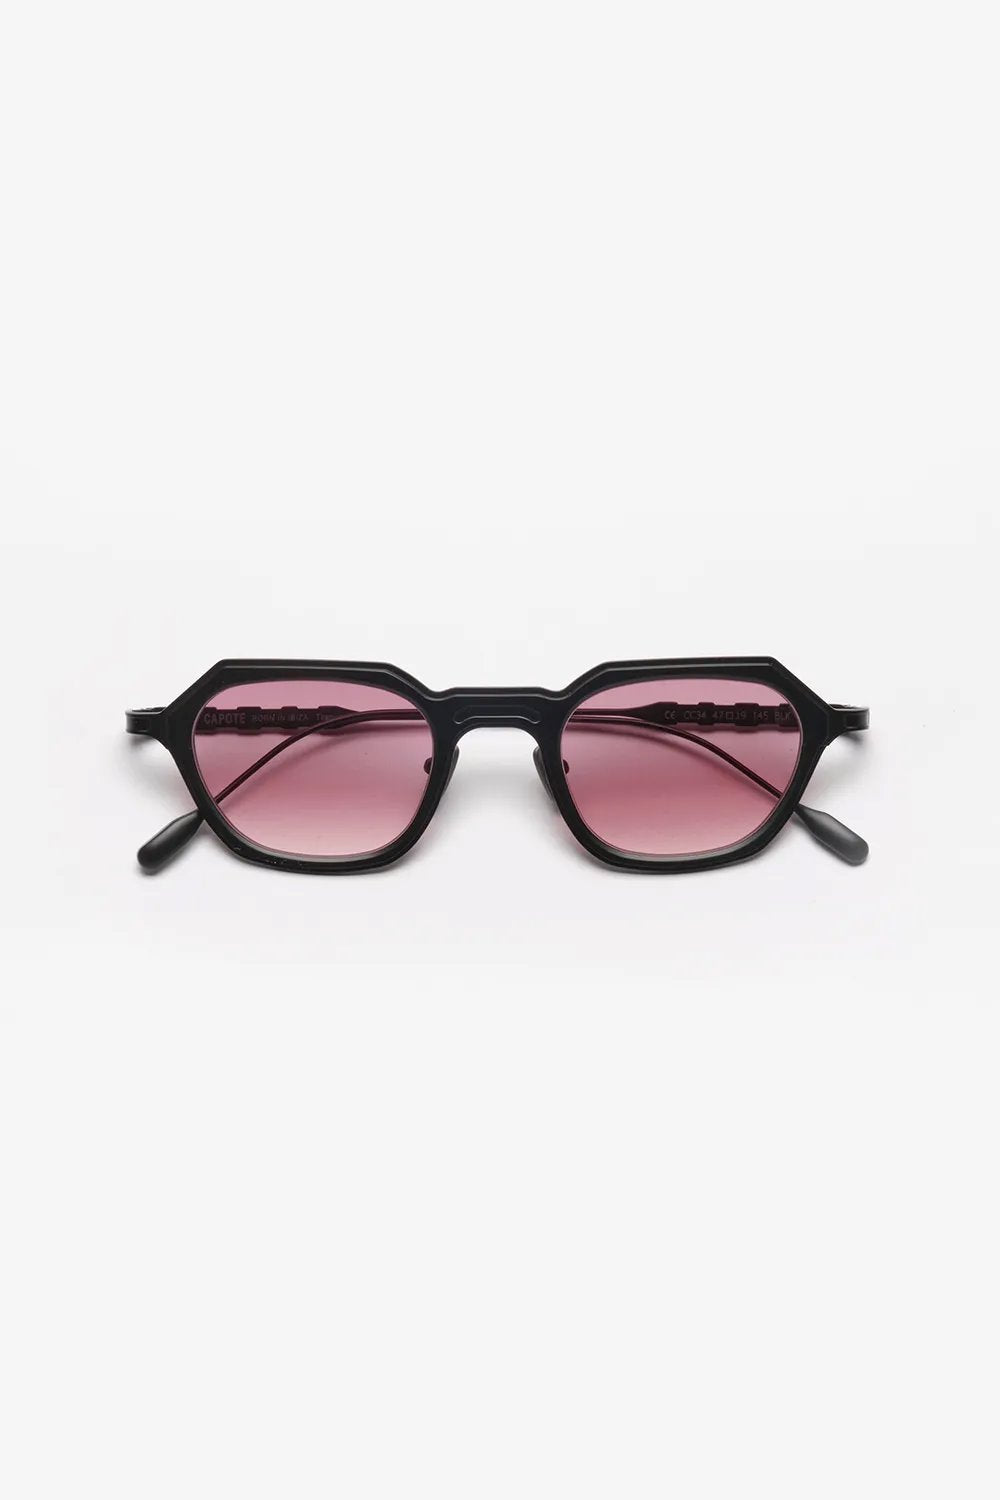 Capote - CC34 Sunglasses Capote Pink ONES 